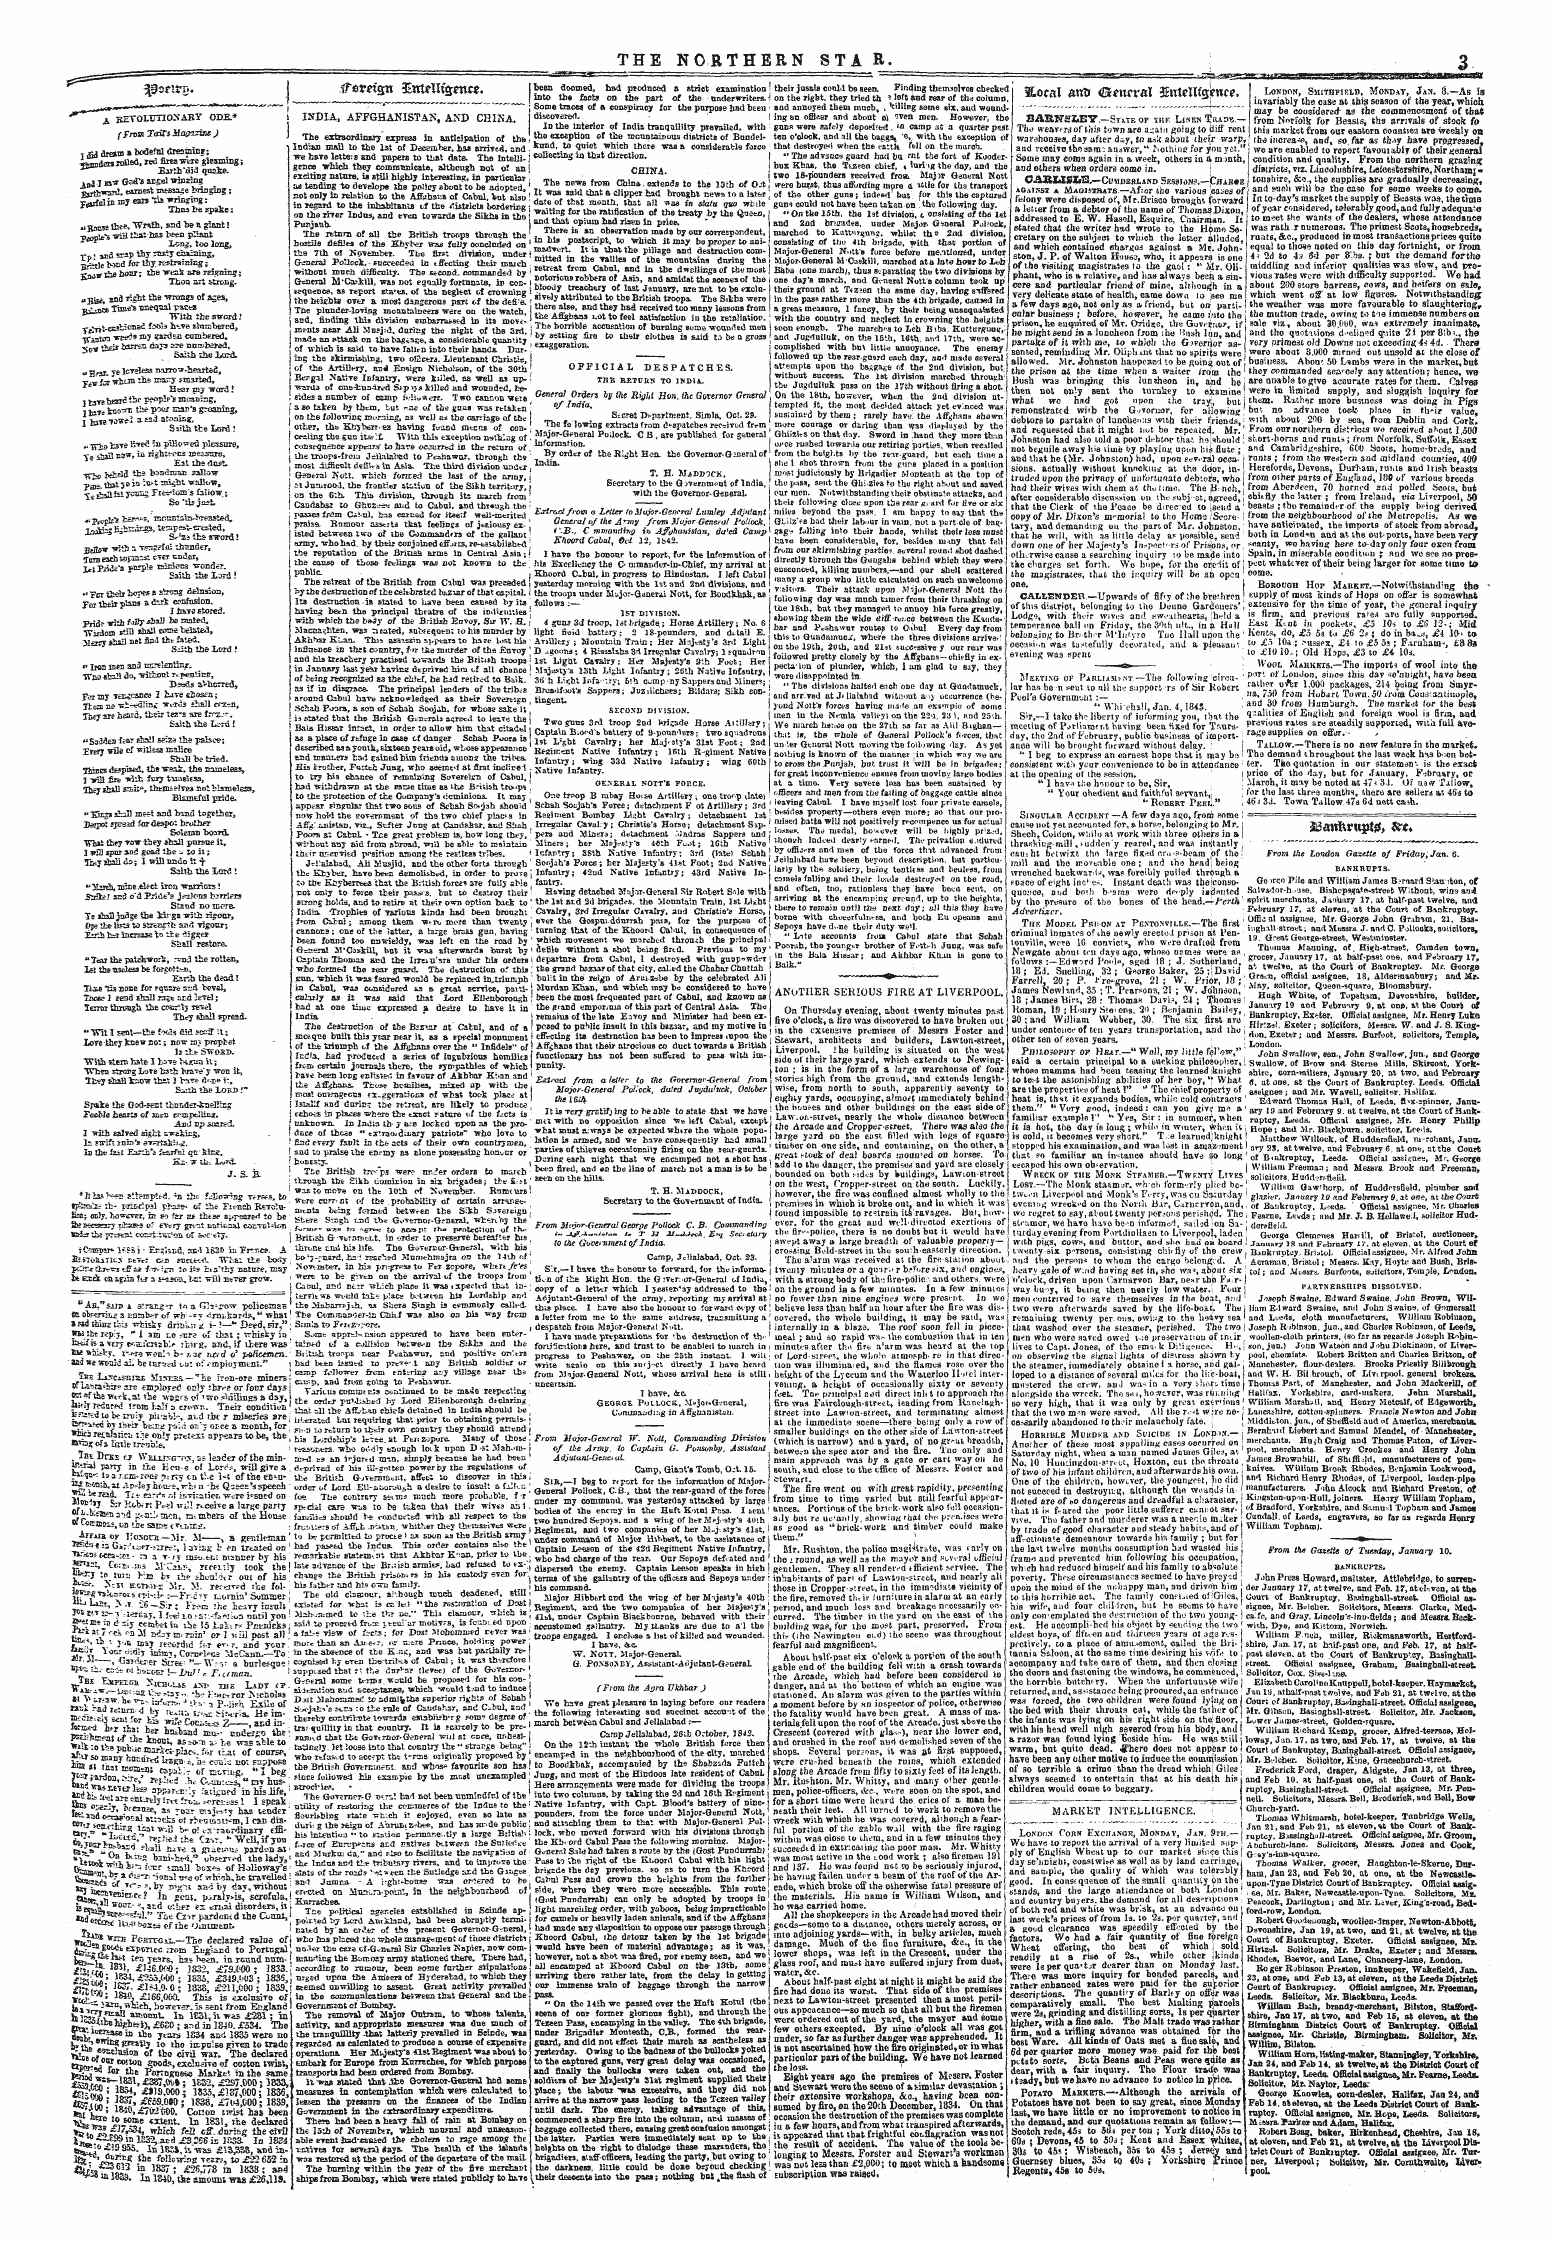 Northern Star (1837-1852): jS F Y, 4th edition - Market Intelligence. T"